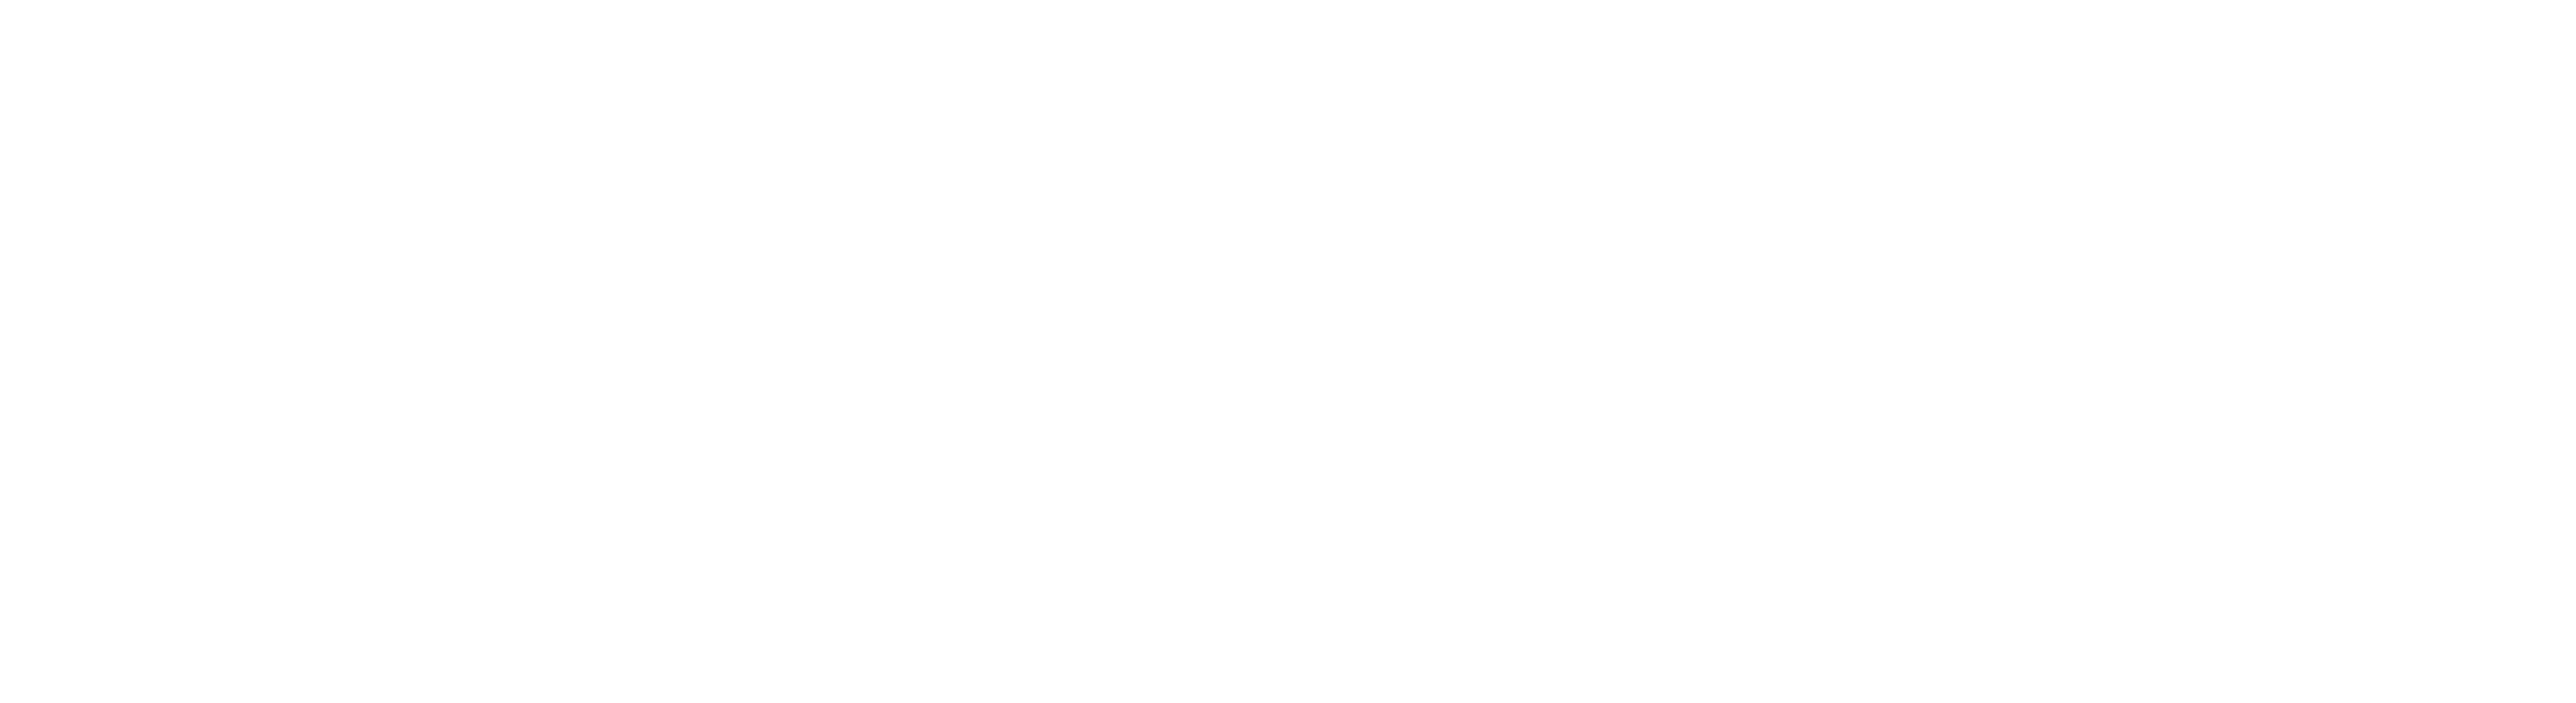 Coor logo white